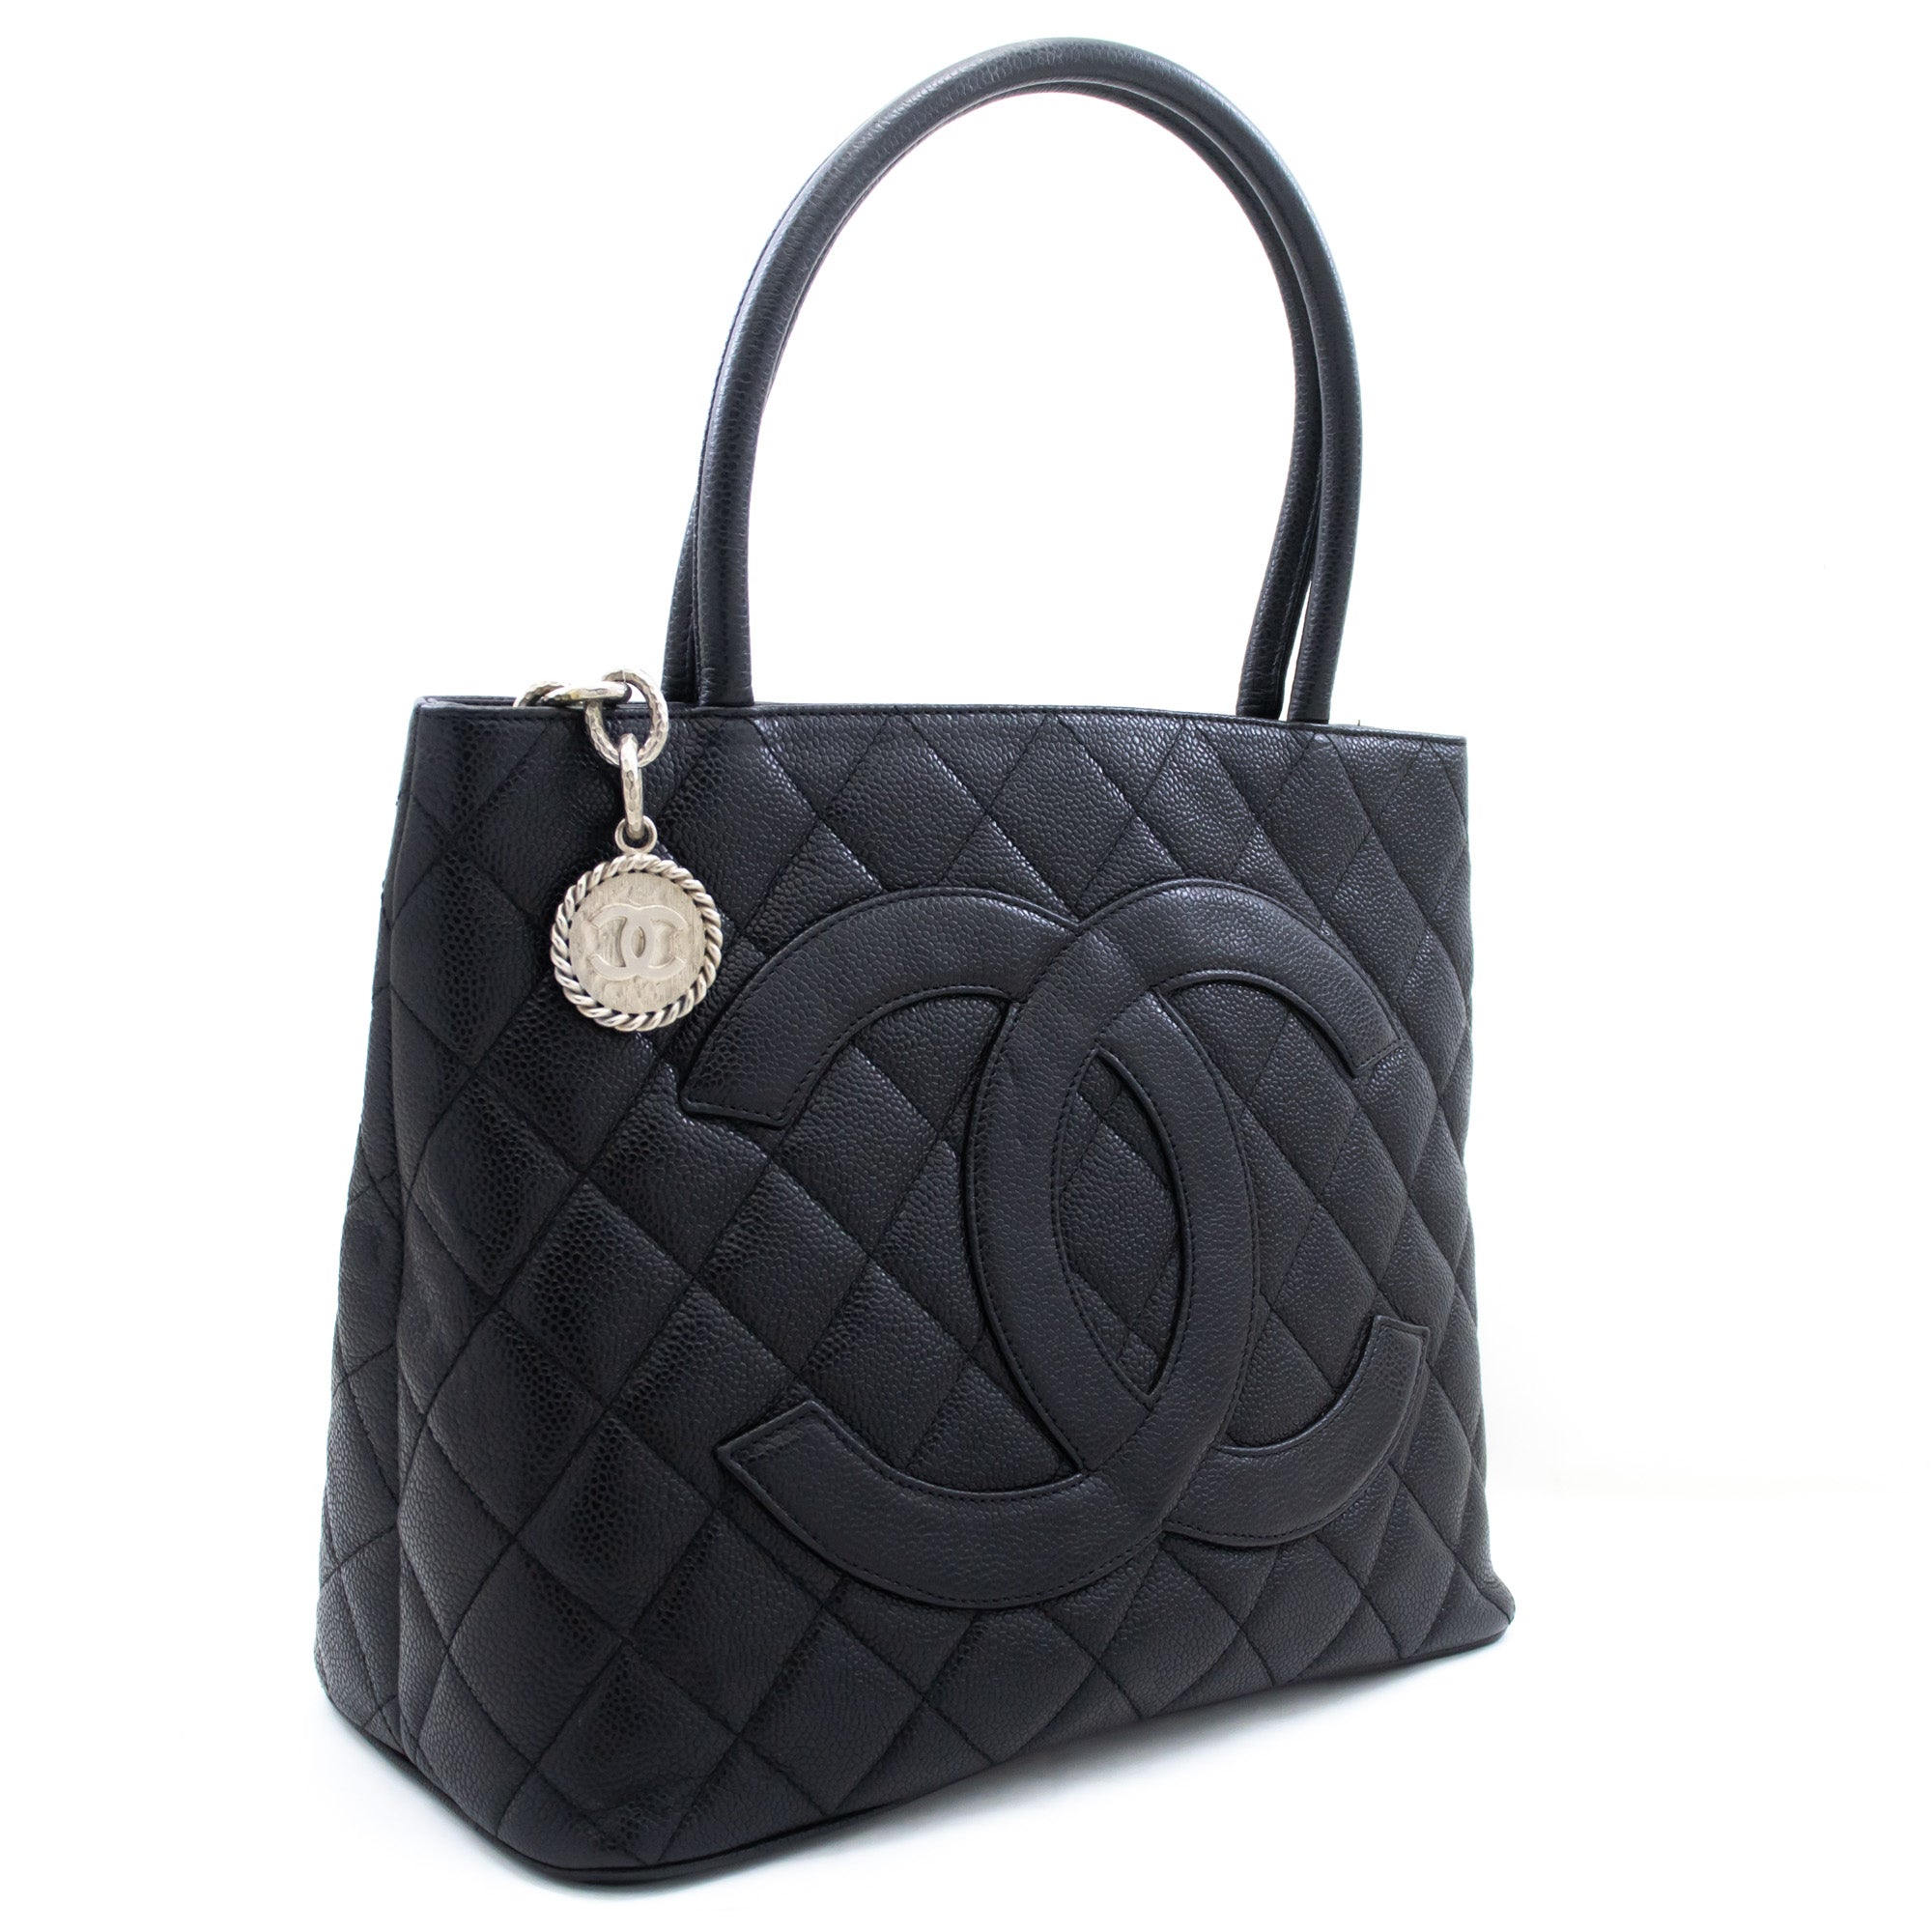 Chanel - Caviar Leather Shopping Bag Noir